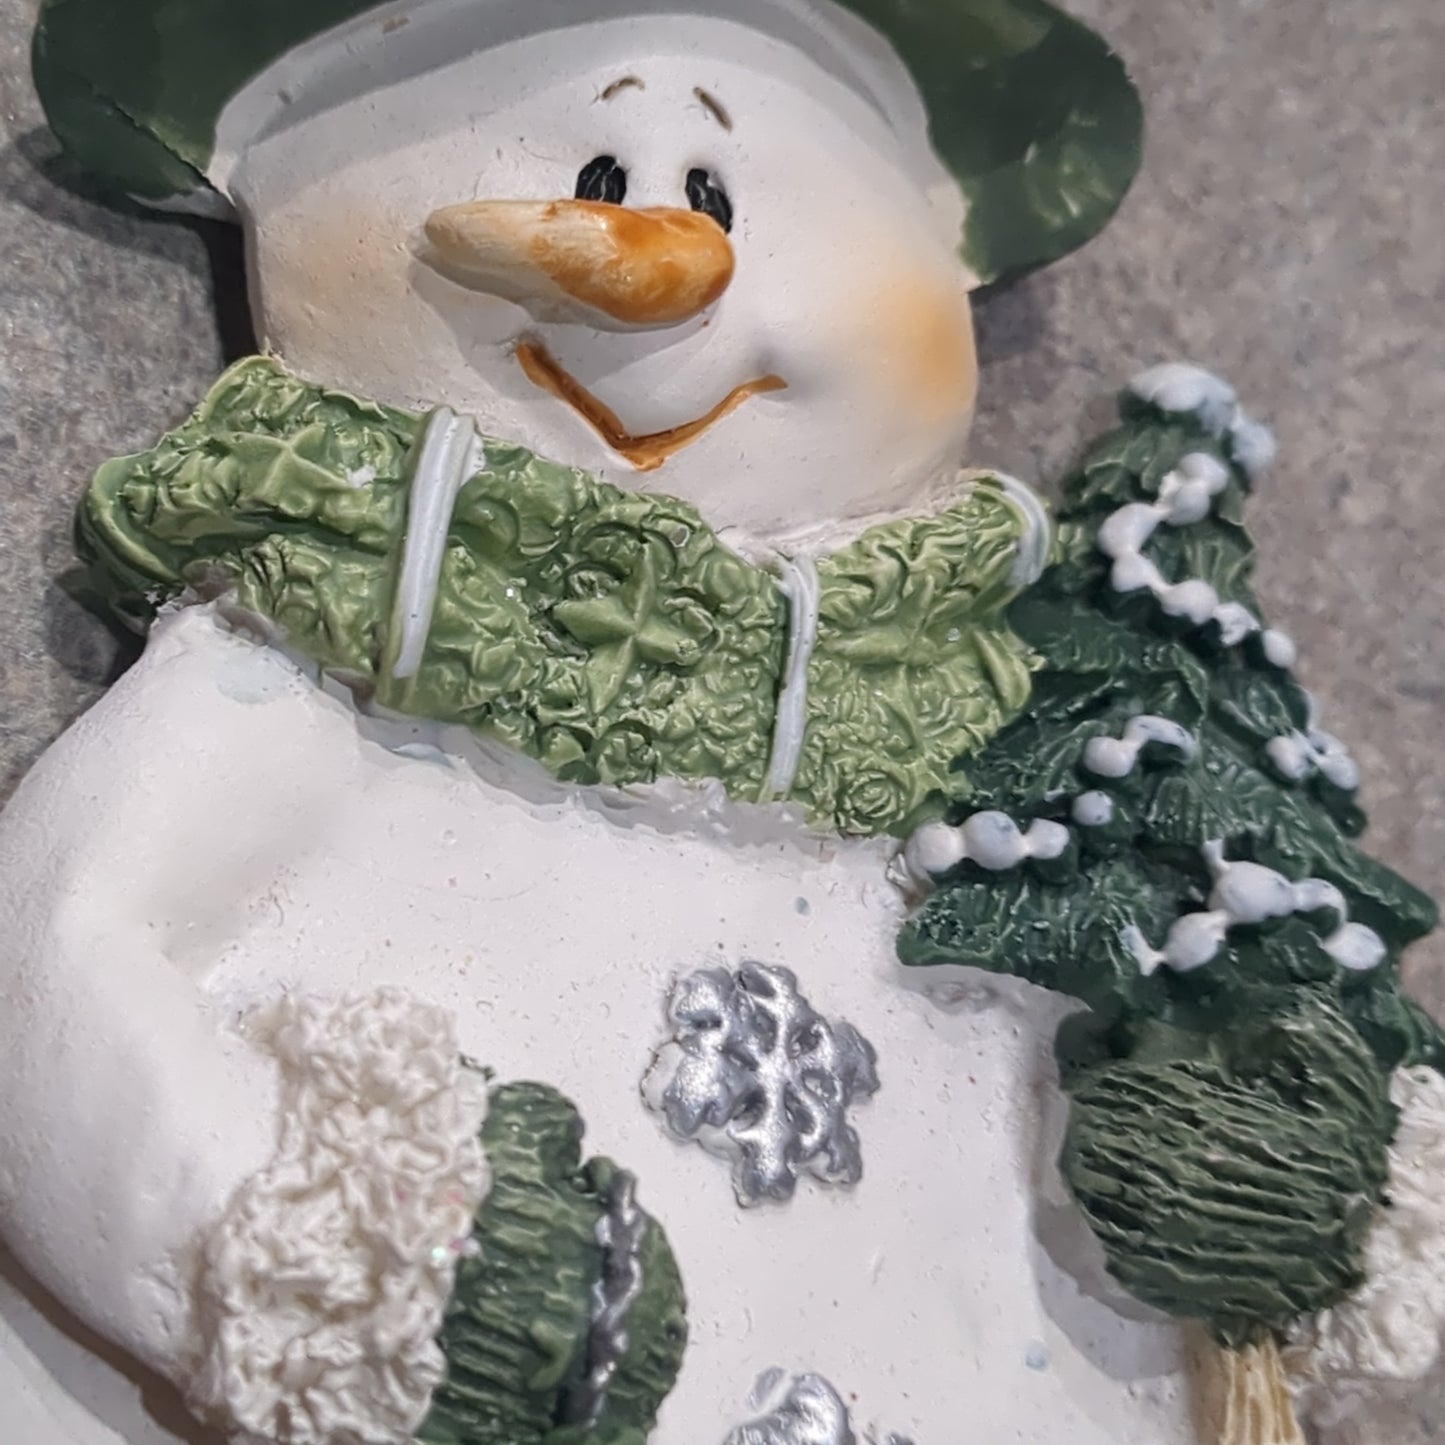 Polycrylic snowman ornament with tree and teddy bear